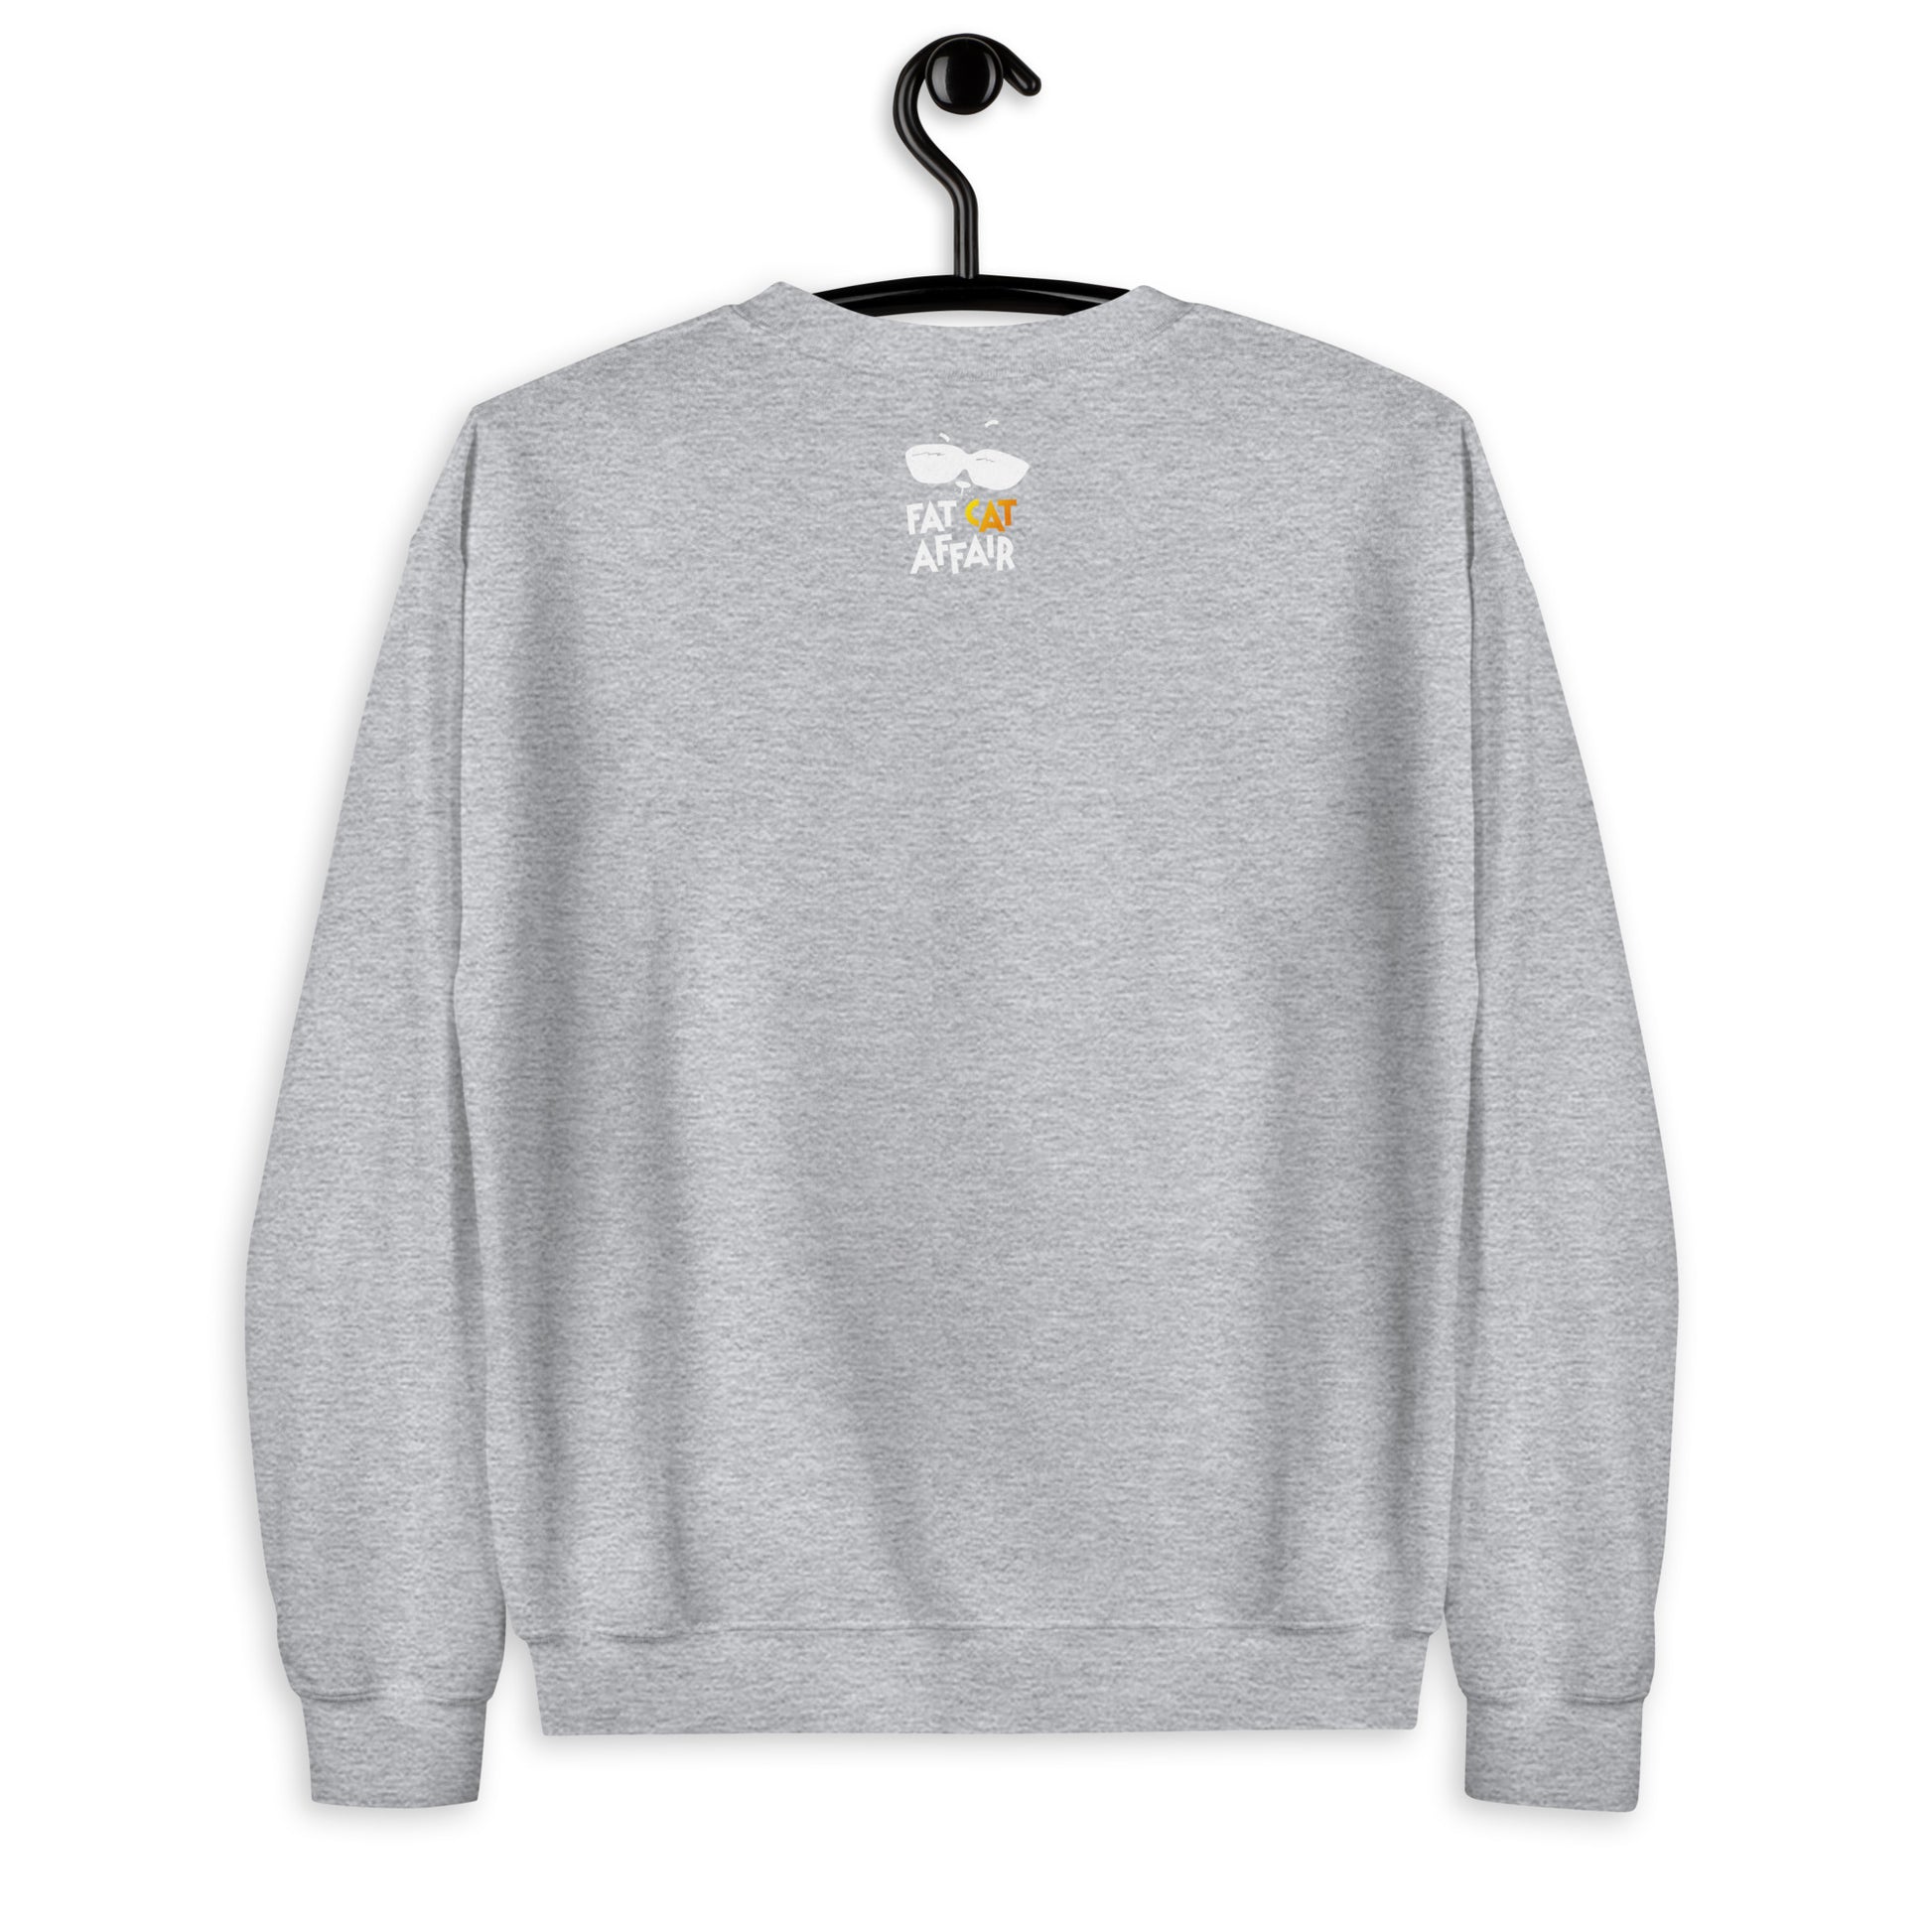 Men's gray sweatshirt with yellow cat